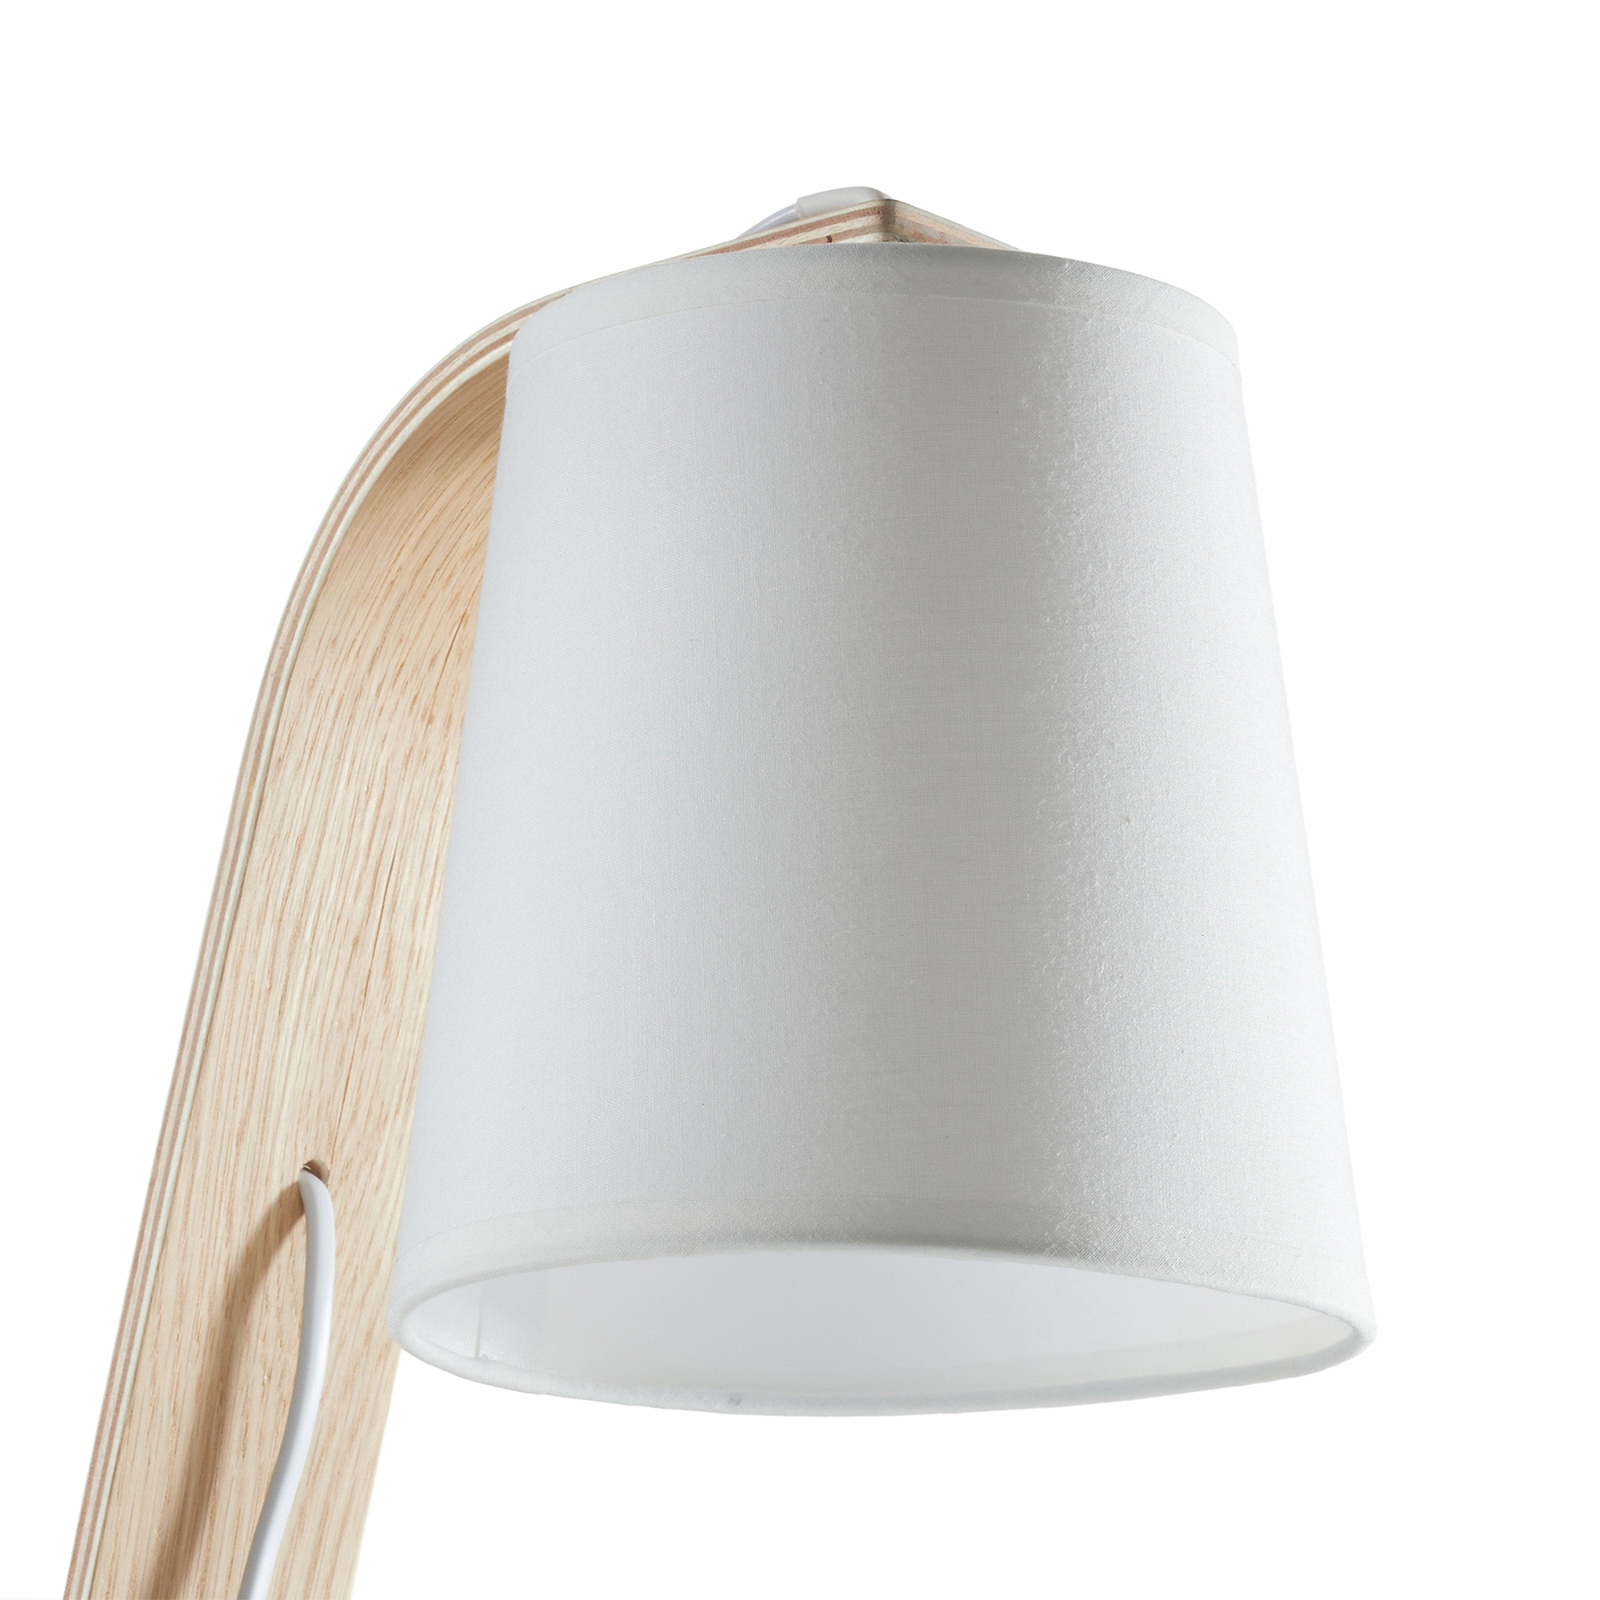 Nordisk vit bordslampa i trä med tygskärm